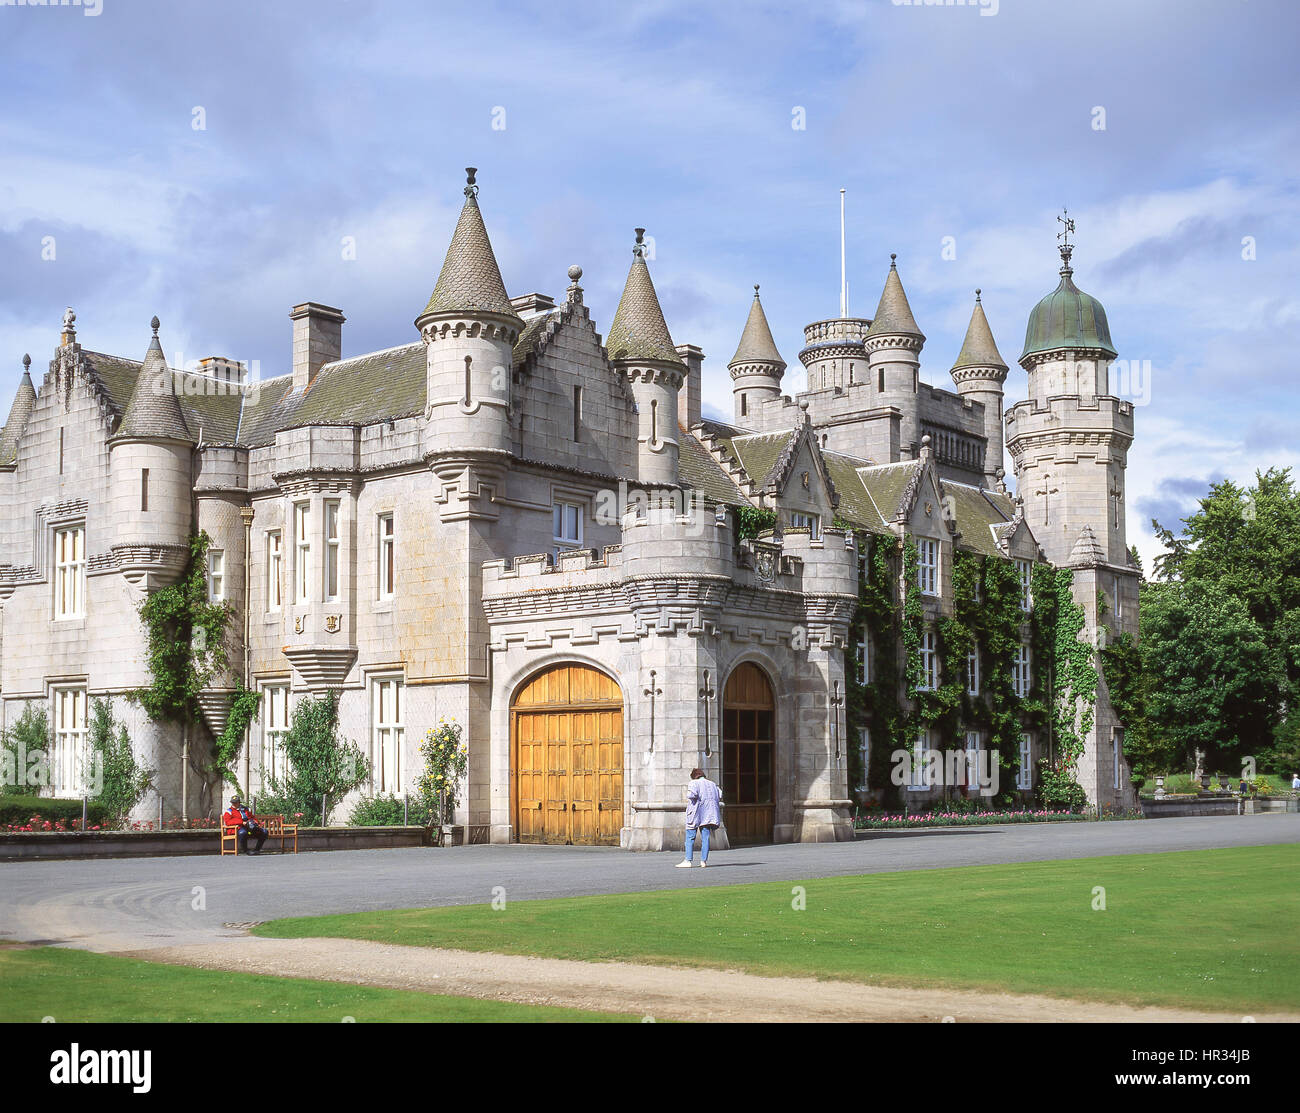 Balmoral Castle and gardens, Royal Deeside, Aberdeenshire, Scotland, United Kingdom Stock Photo